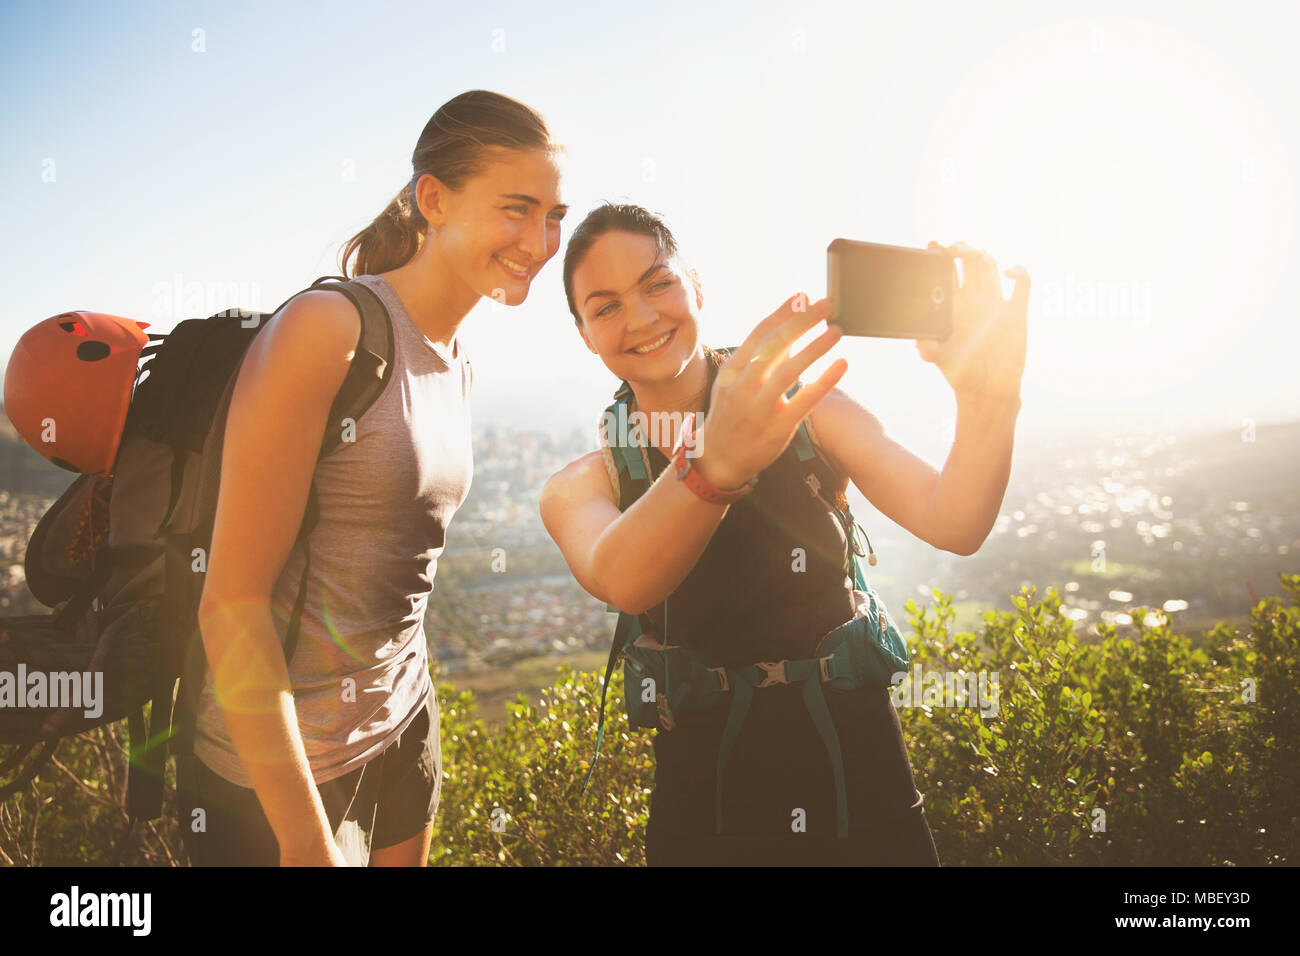 Female rock climbers taking selfie with camera phone Stock Photo